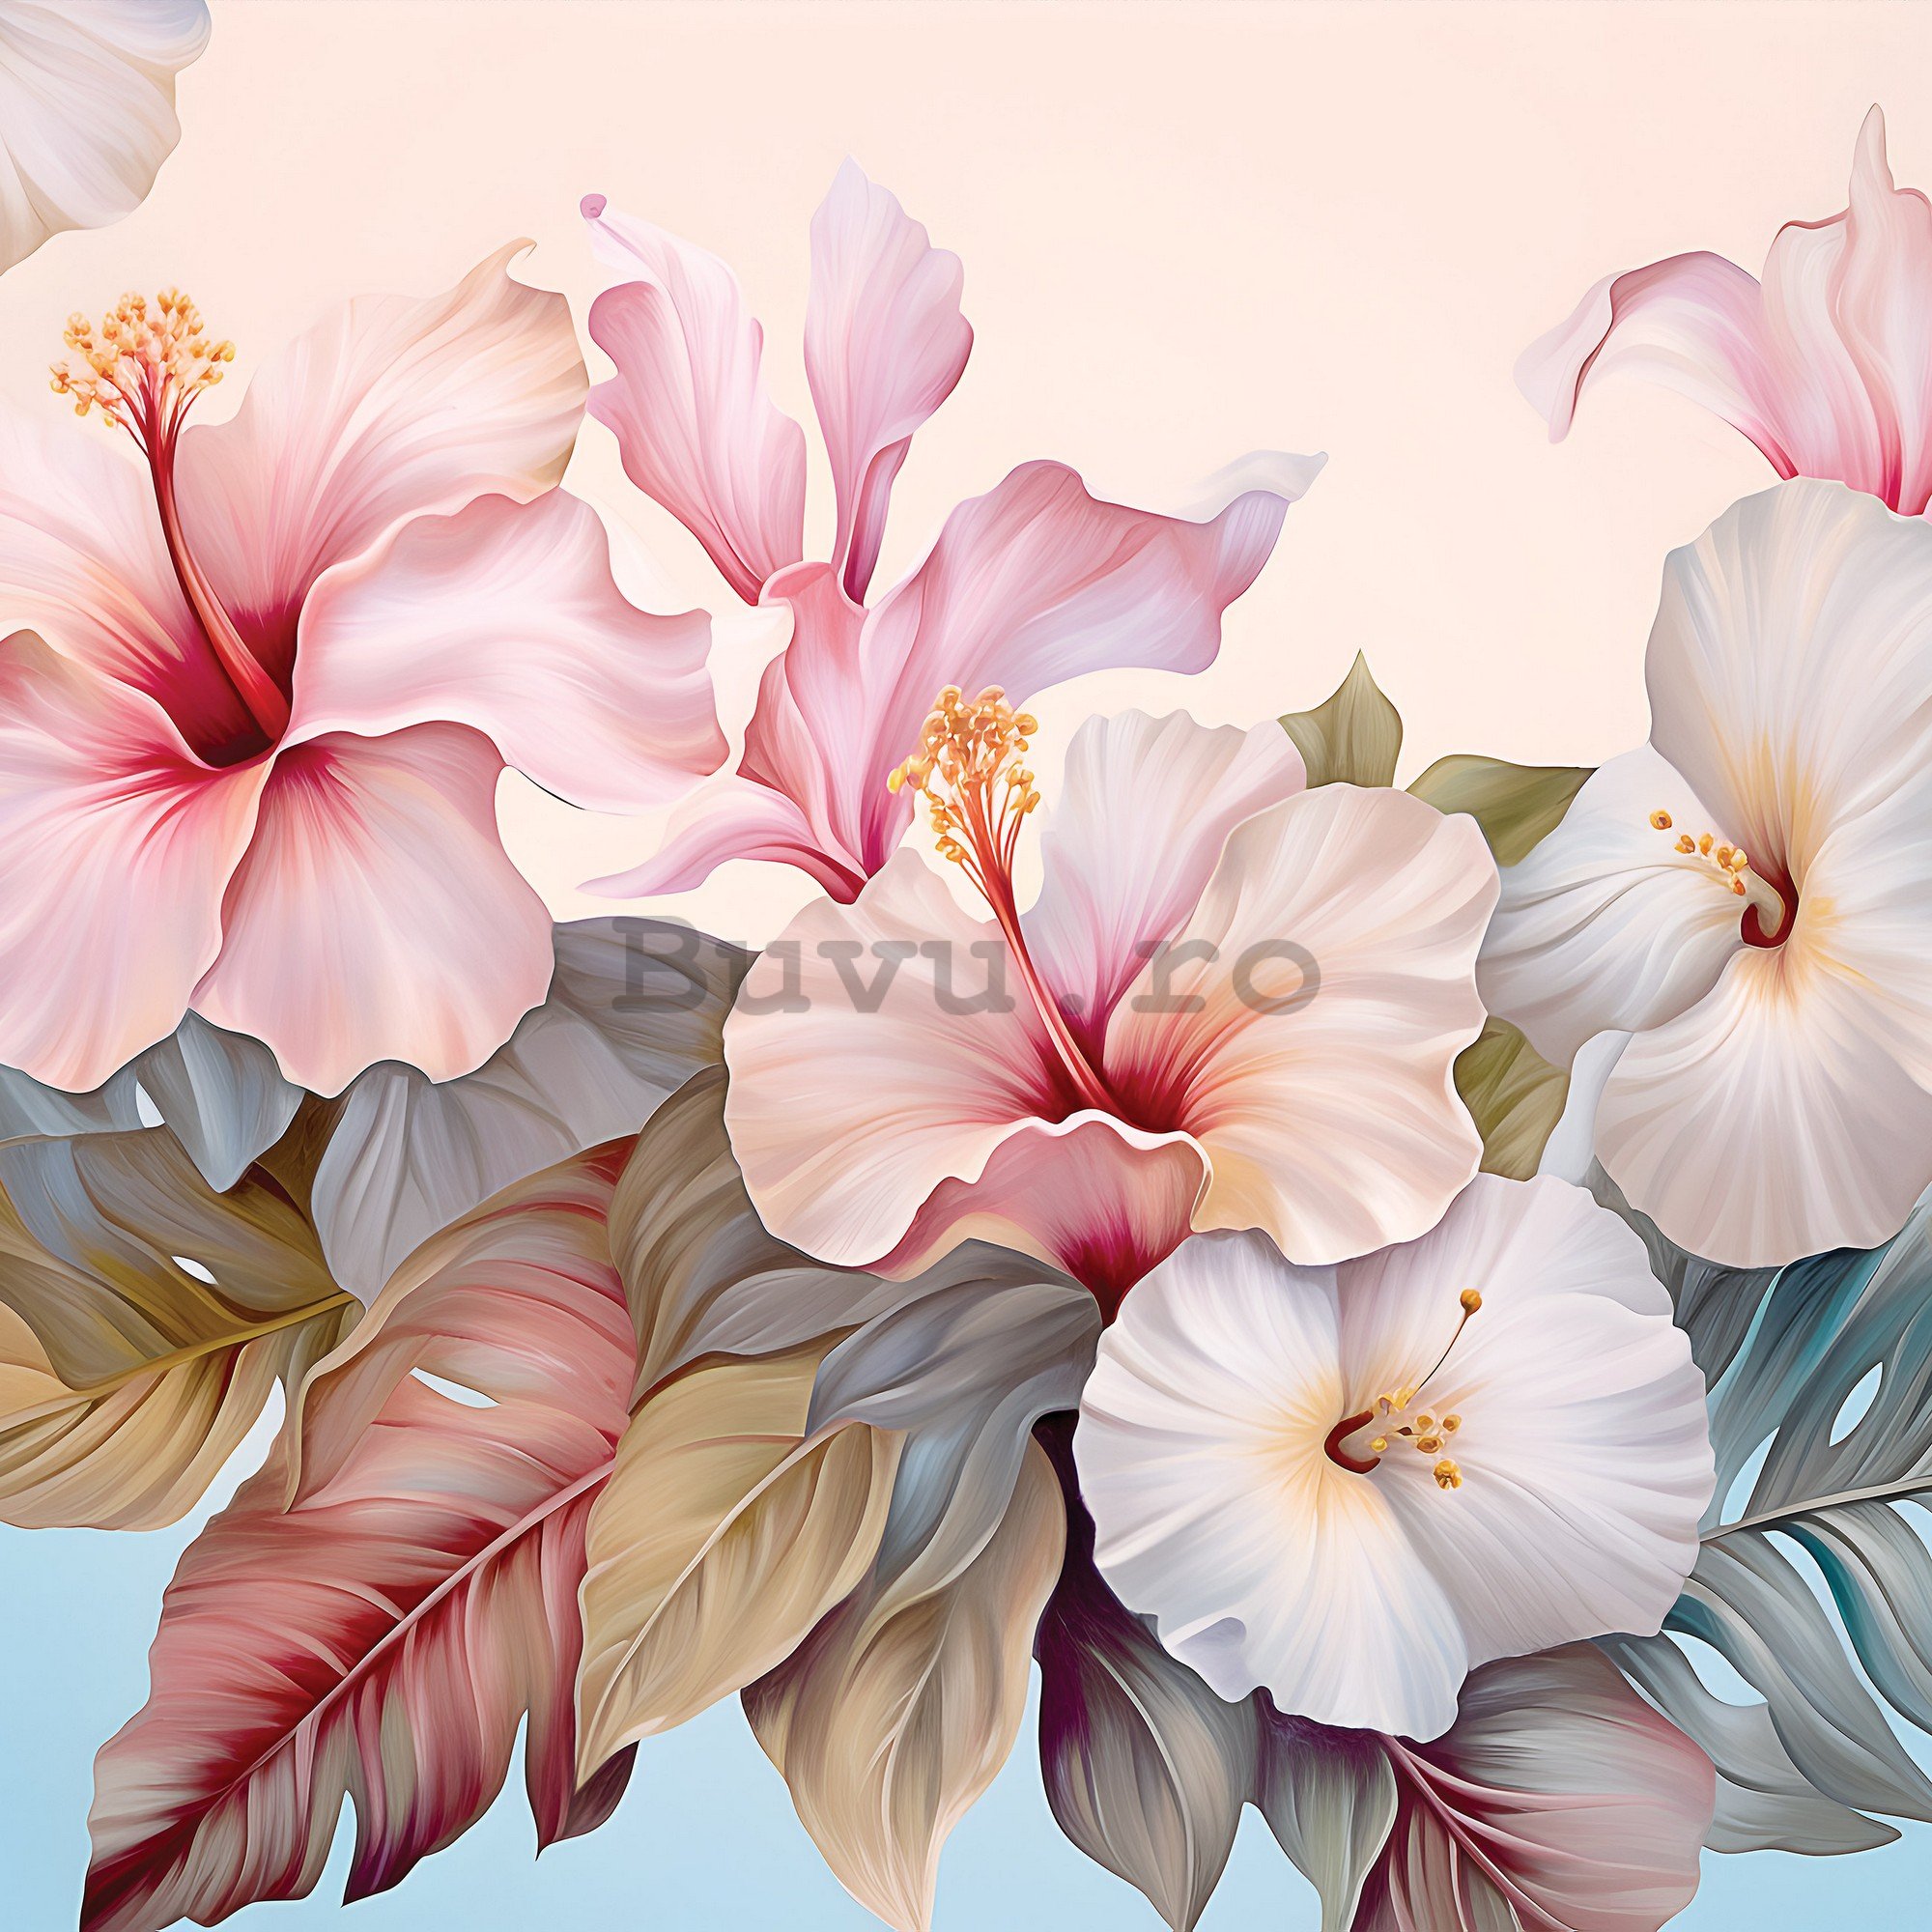 Fototapet vlies: Nature flowers hibiscus painting - 416x254 cm